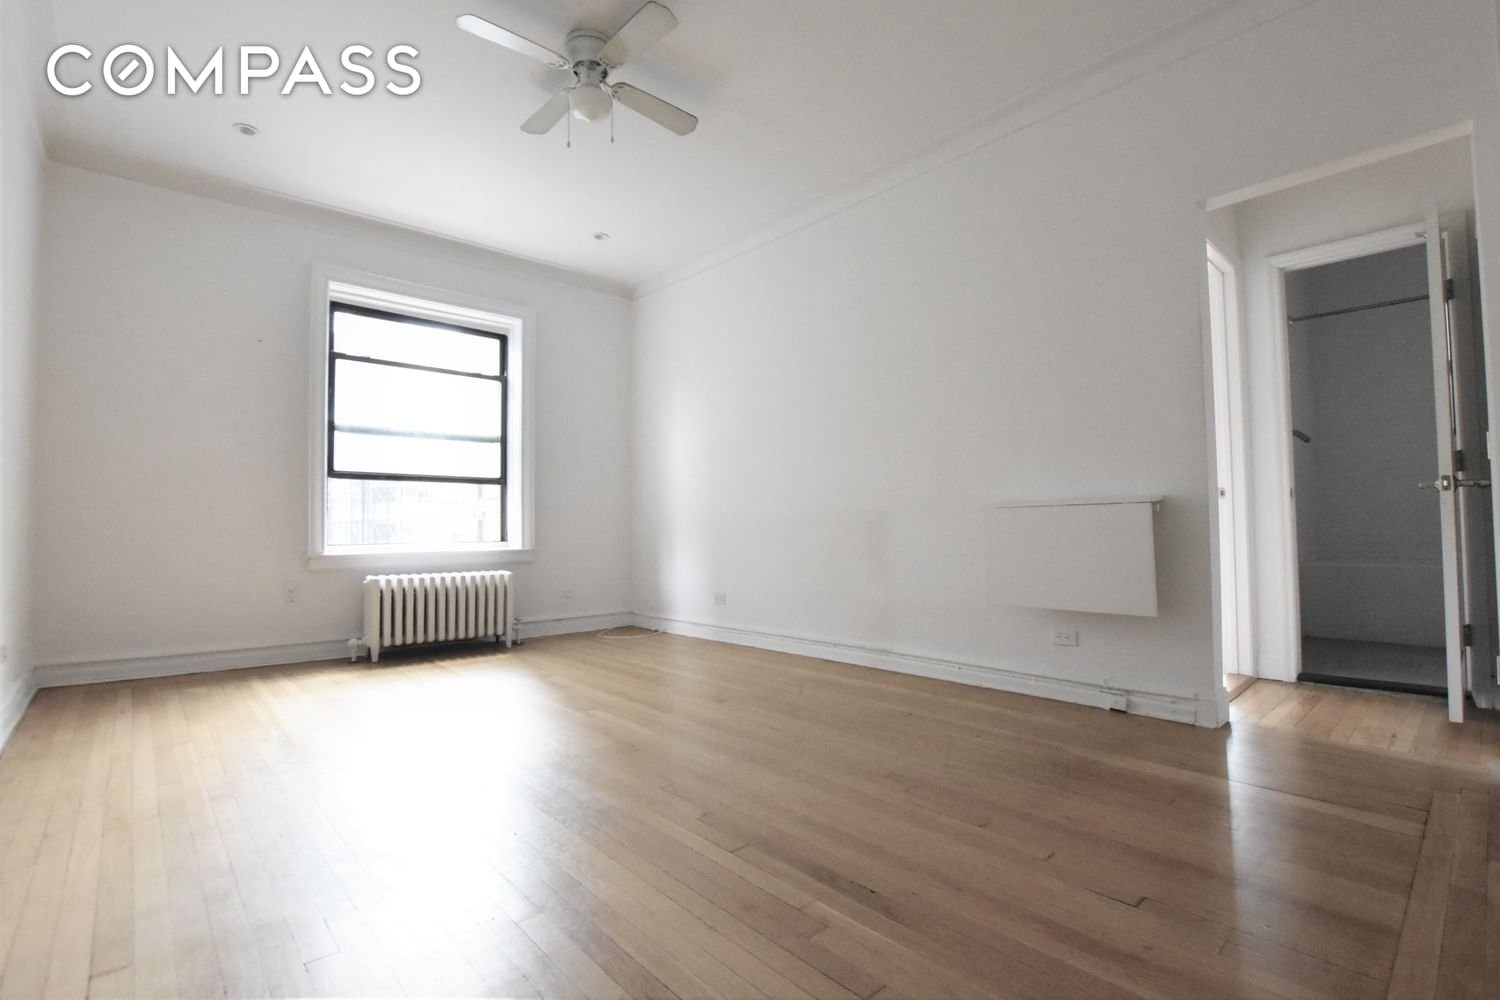 Real estate property located at 172 5th #3-E, New York, New York City, NY